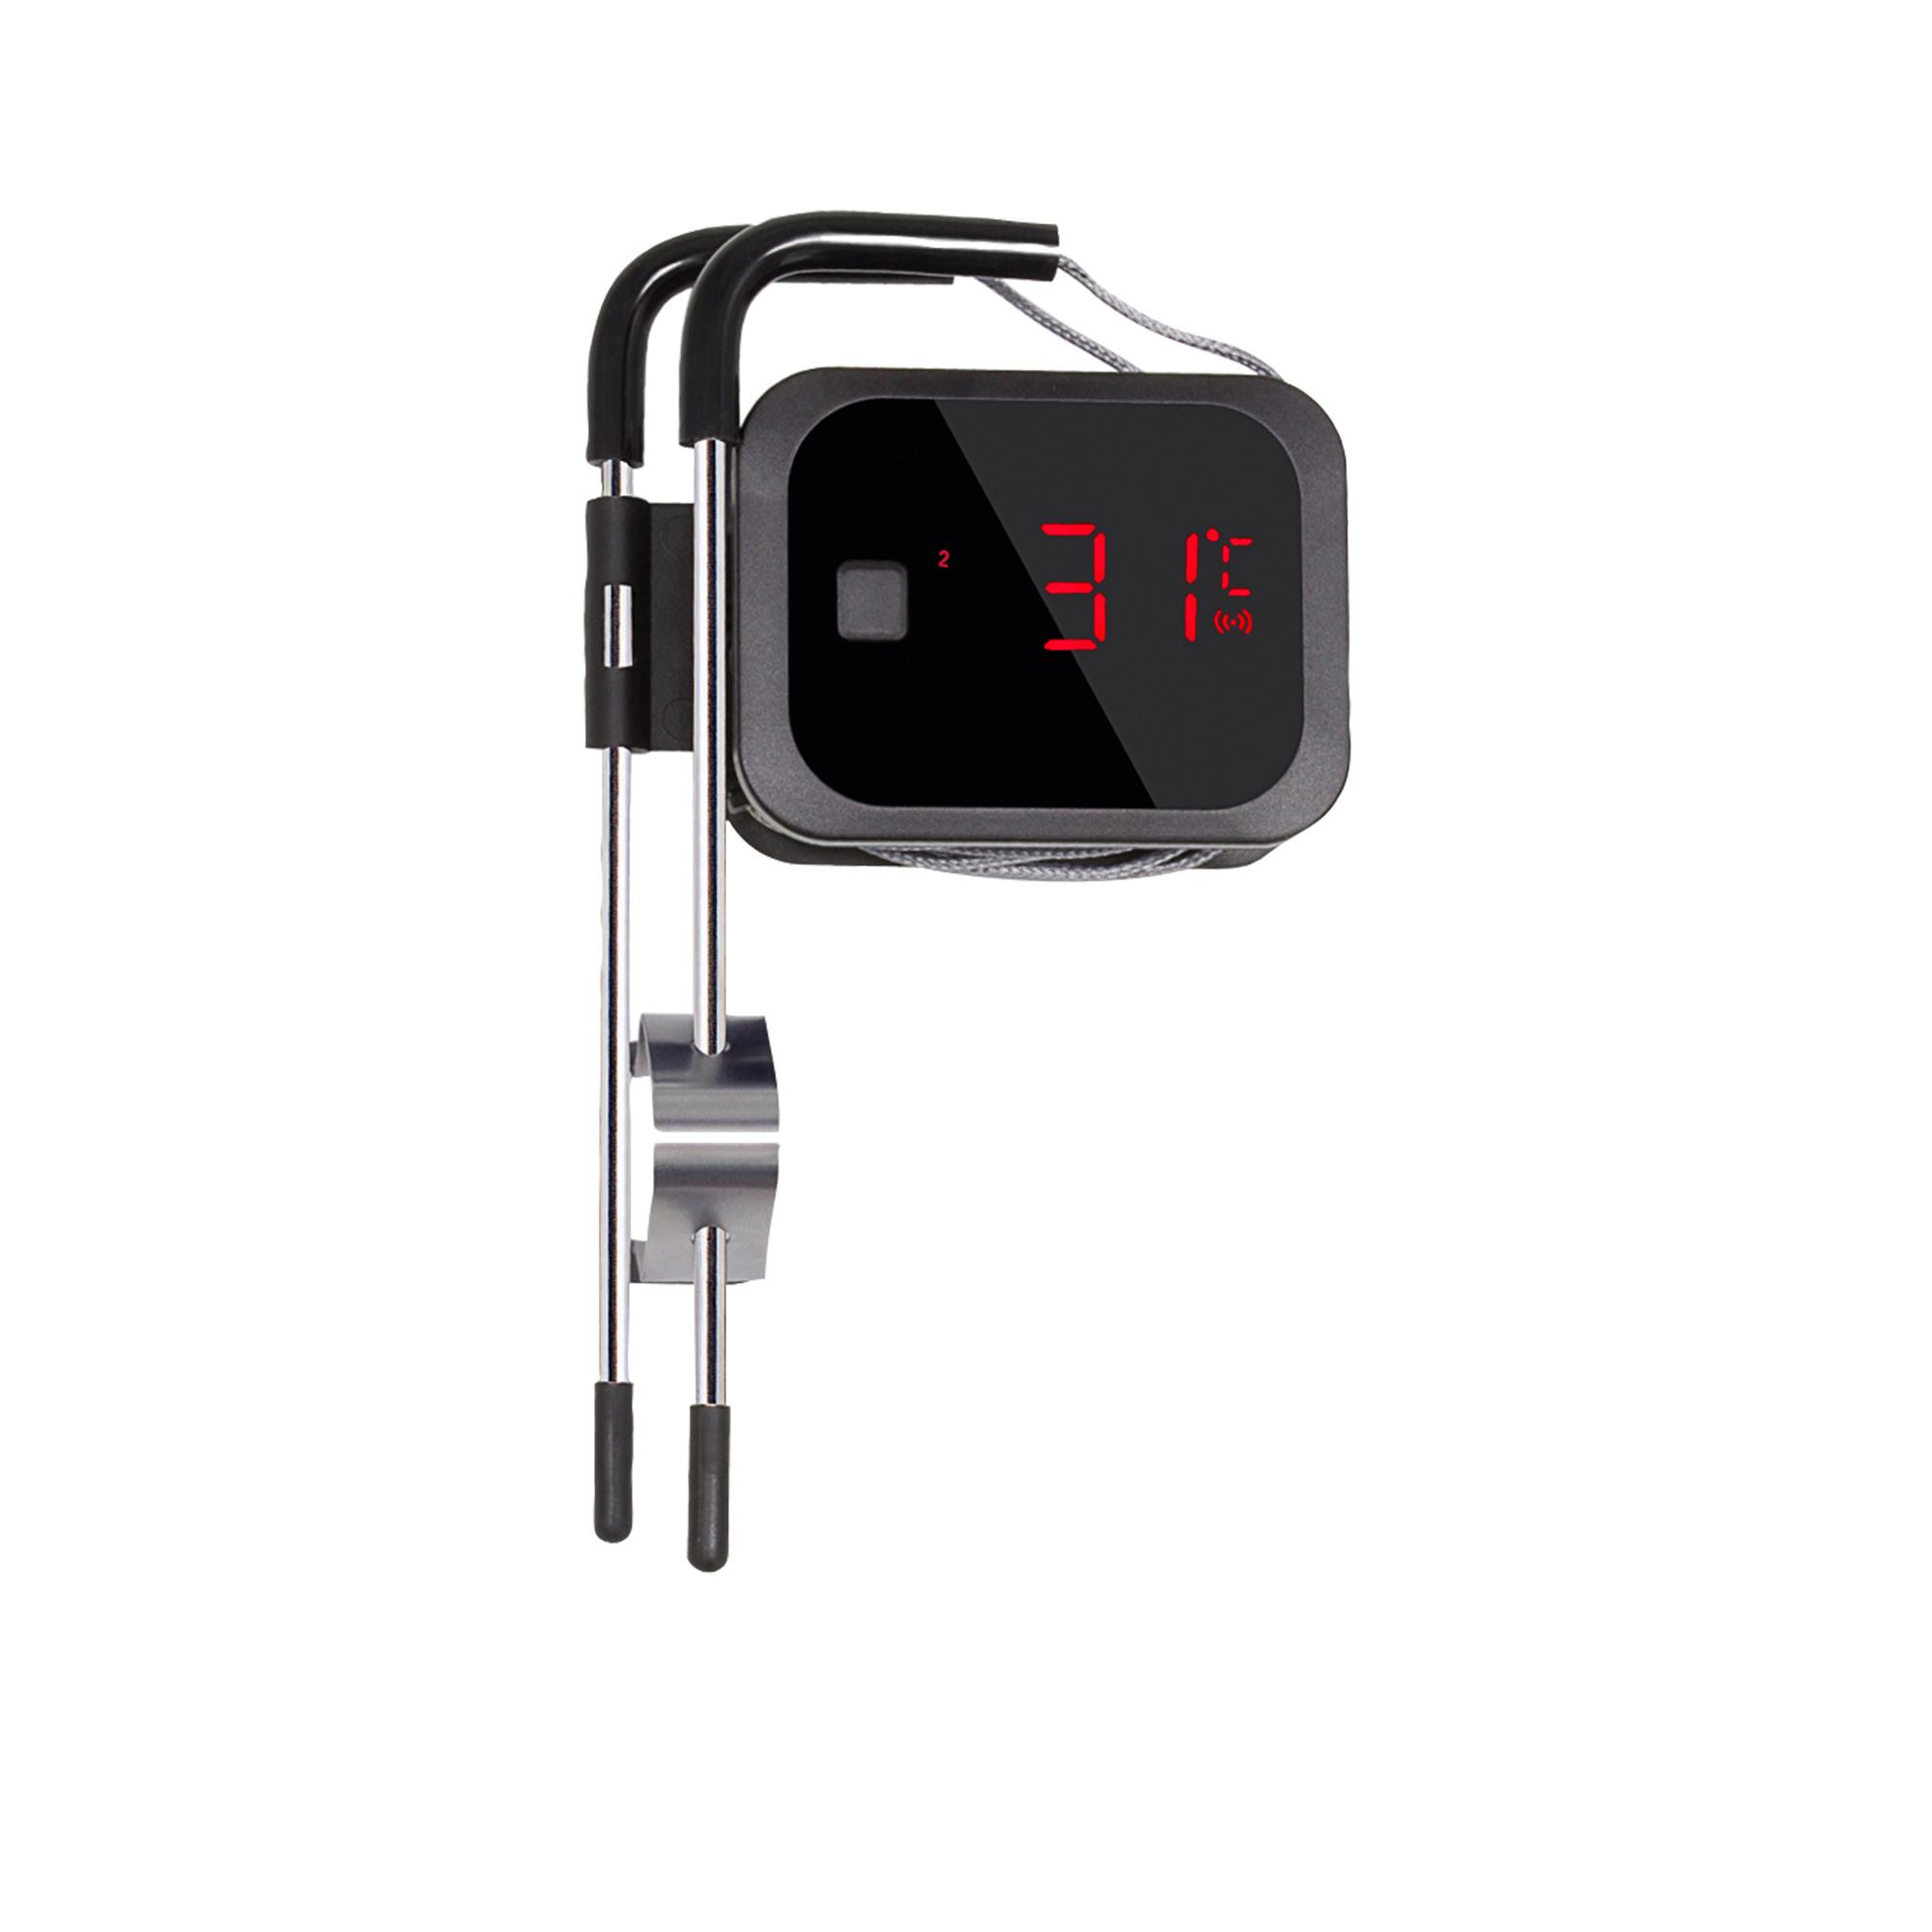 Inkbird IBT-2X Digital Bluetooth Wireless Thermometer 2 Probe Image 3